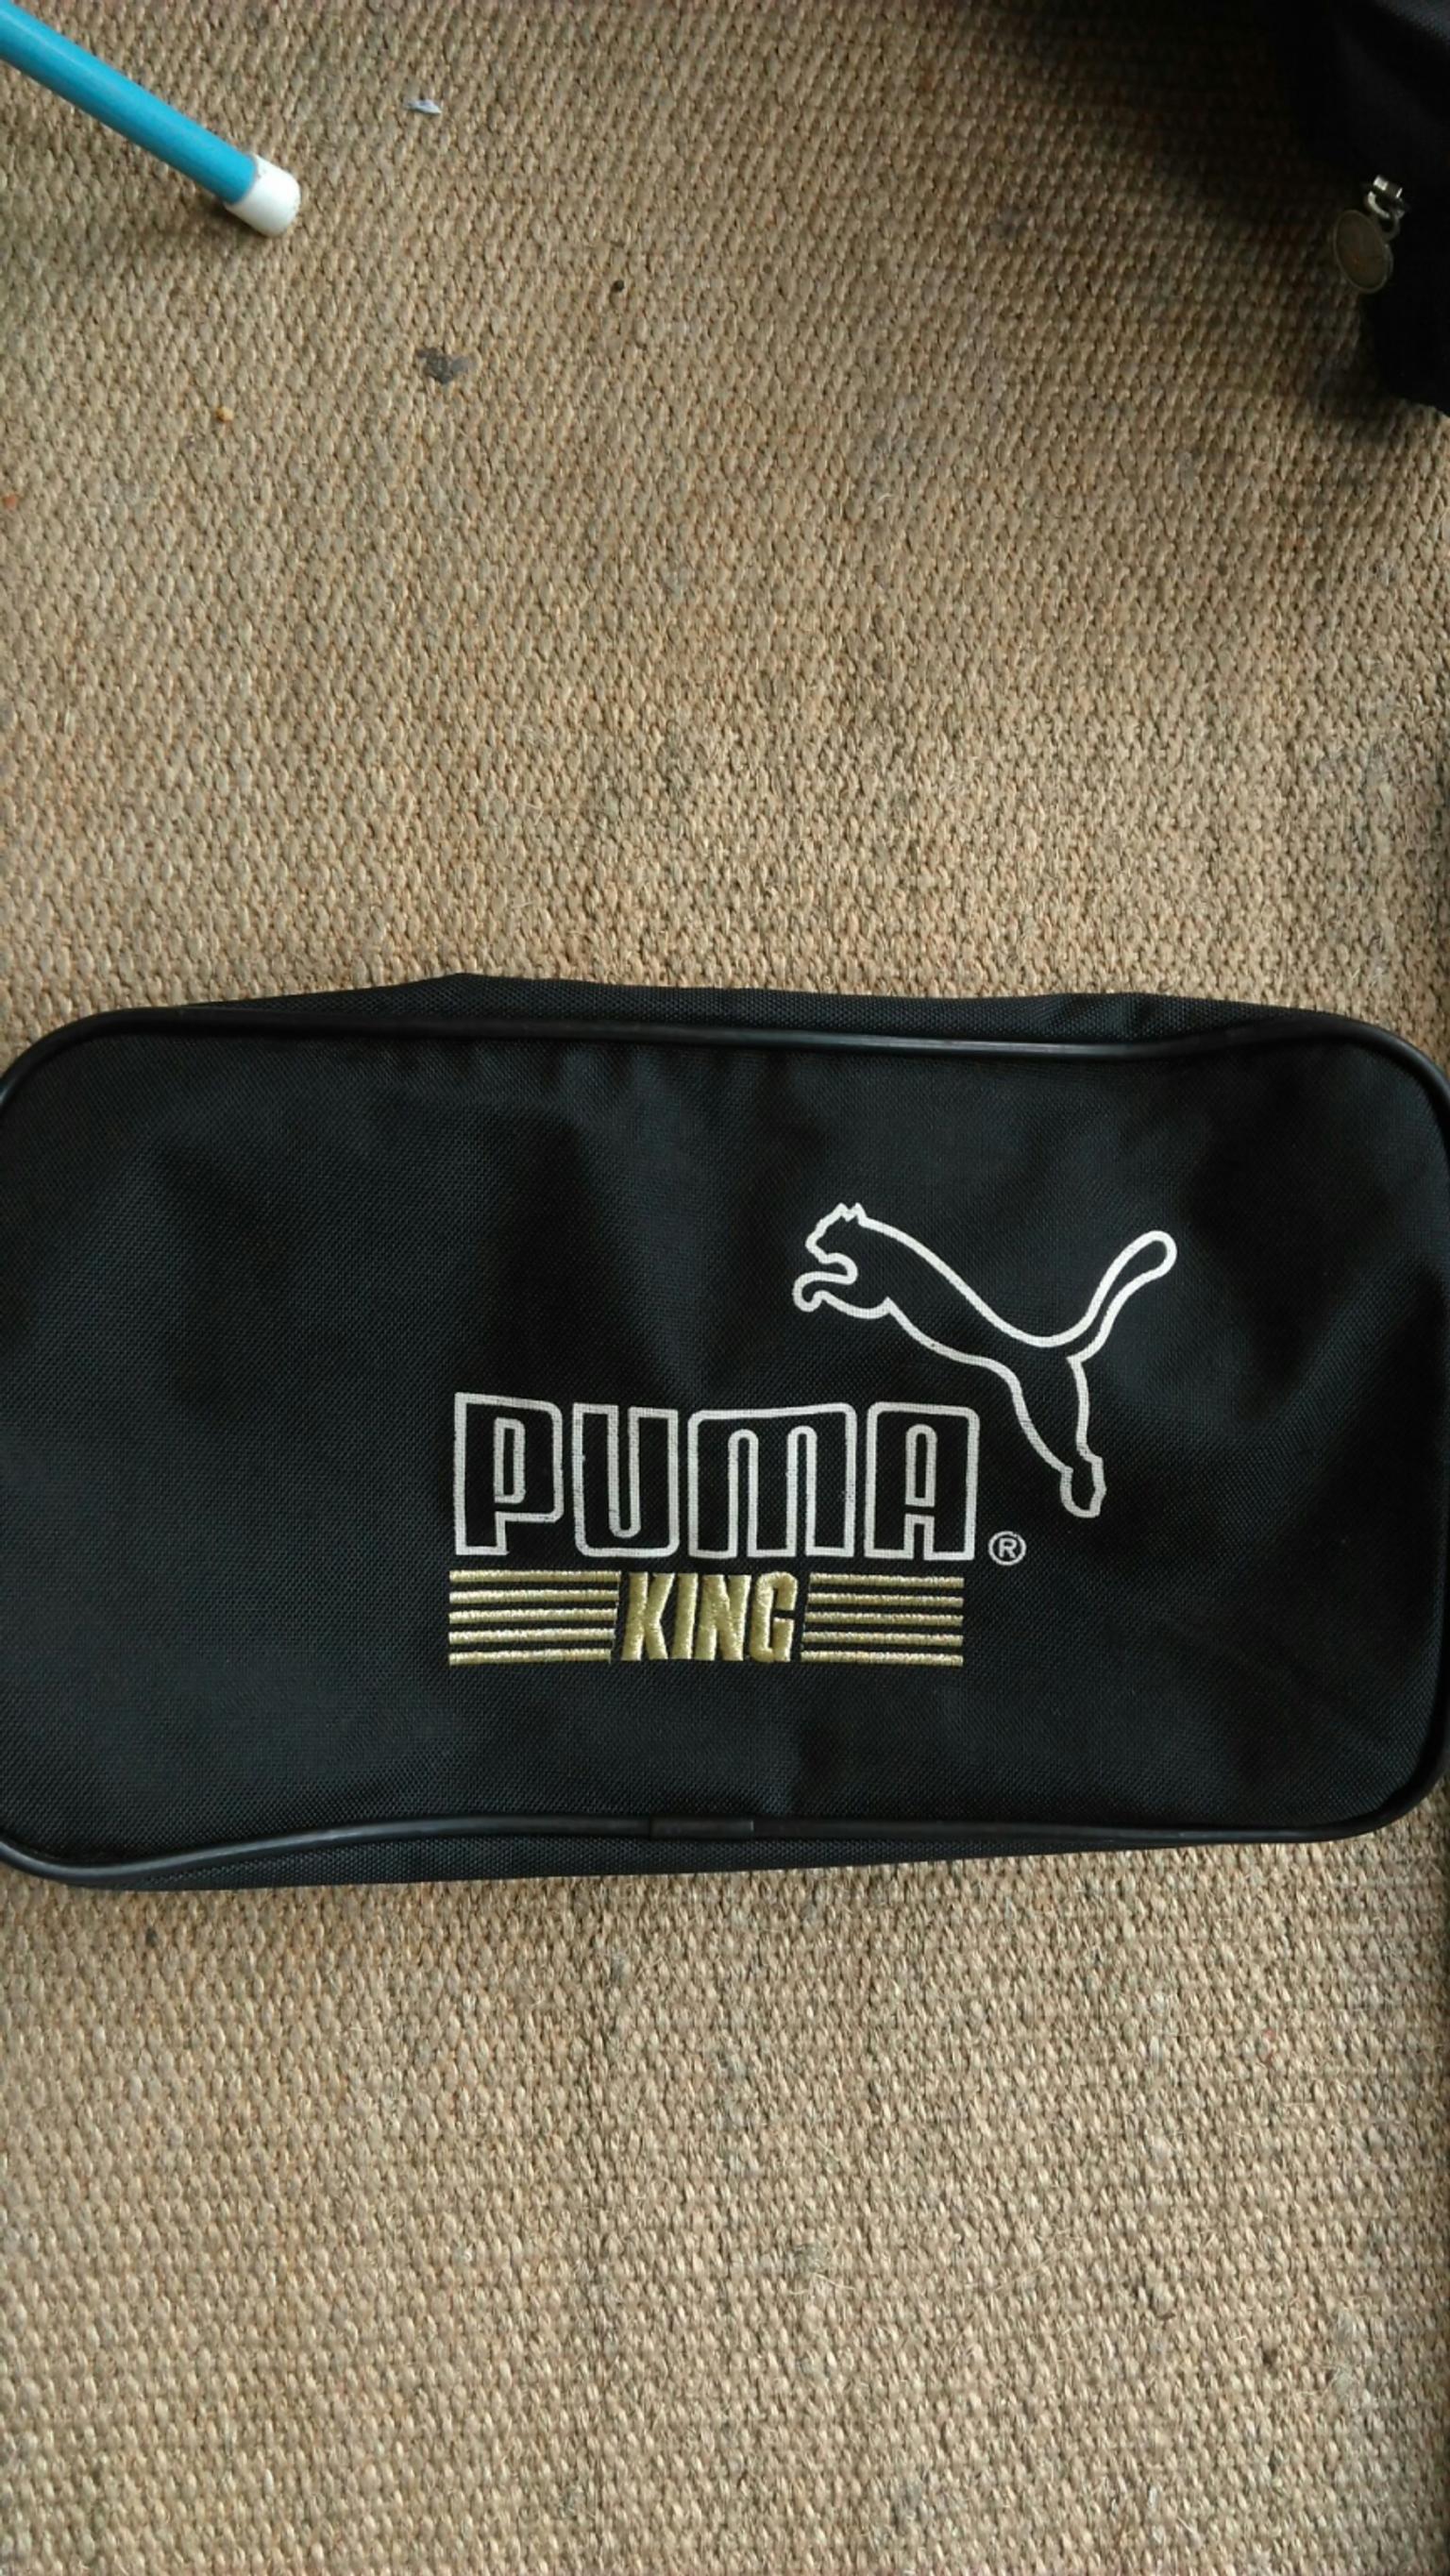 puma king boot bag